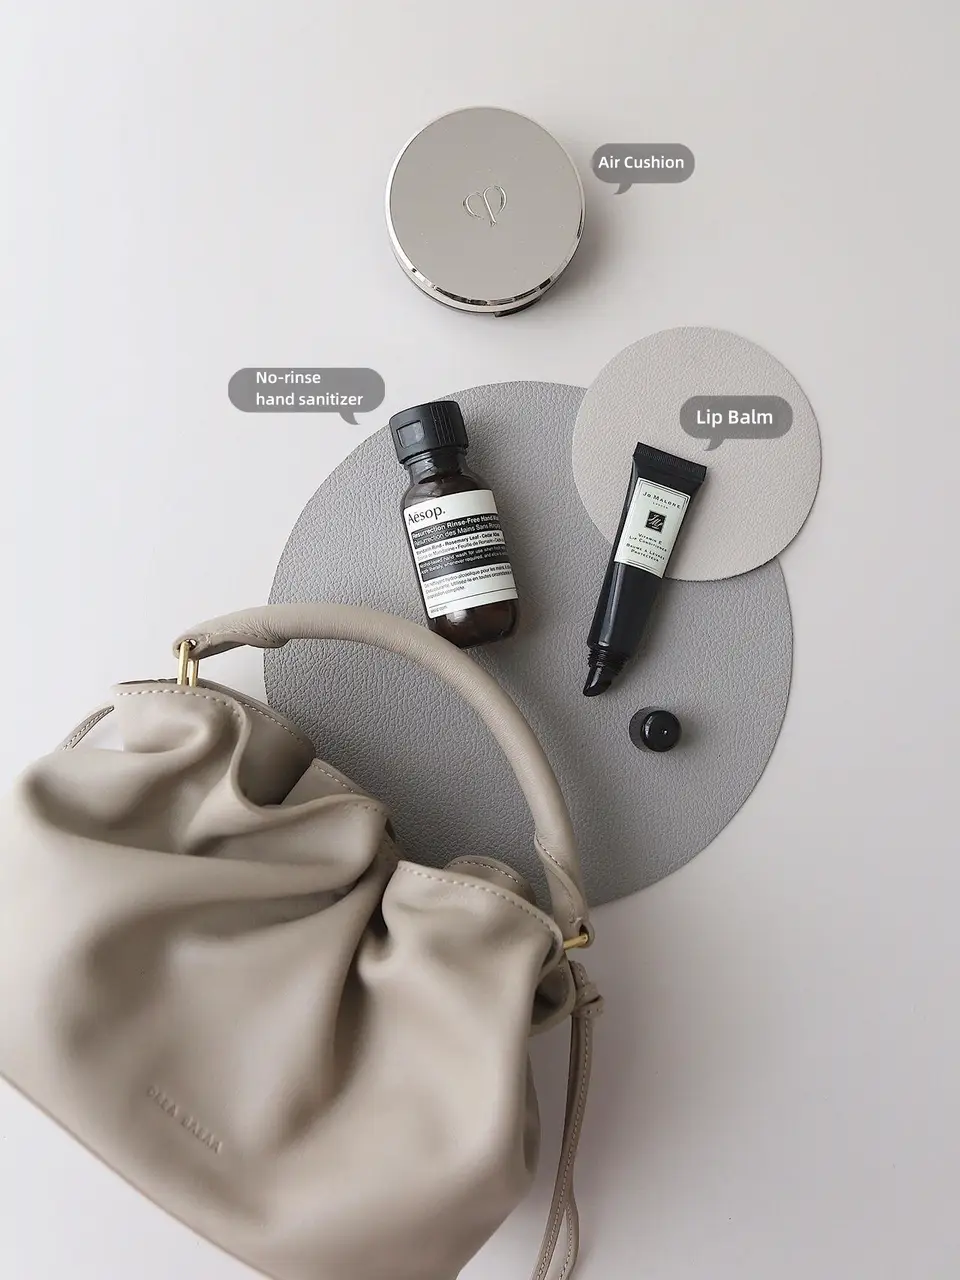 The Handbag Clinic: My Louis Vuitton Noe is repaired! - Fashion